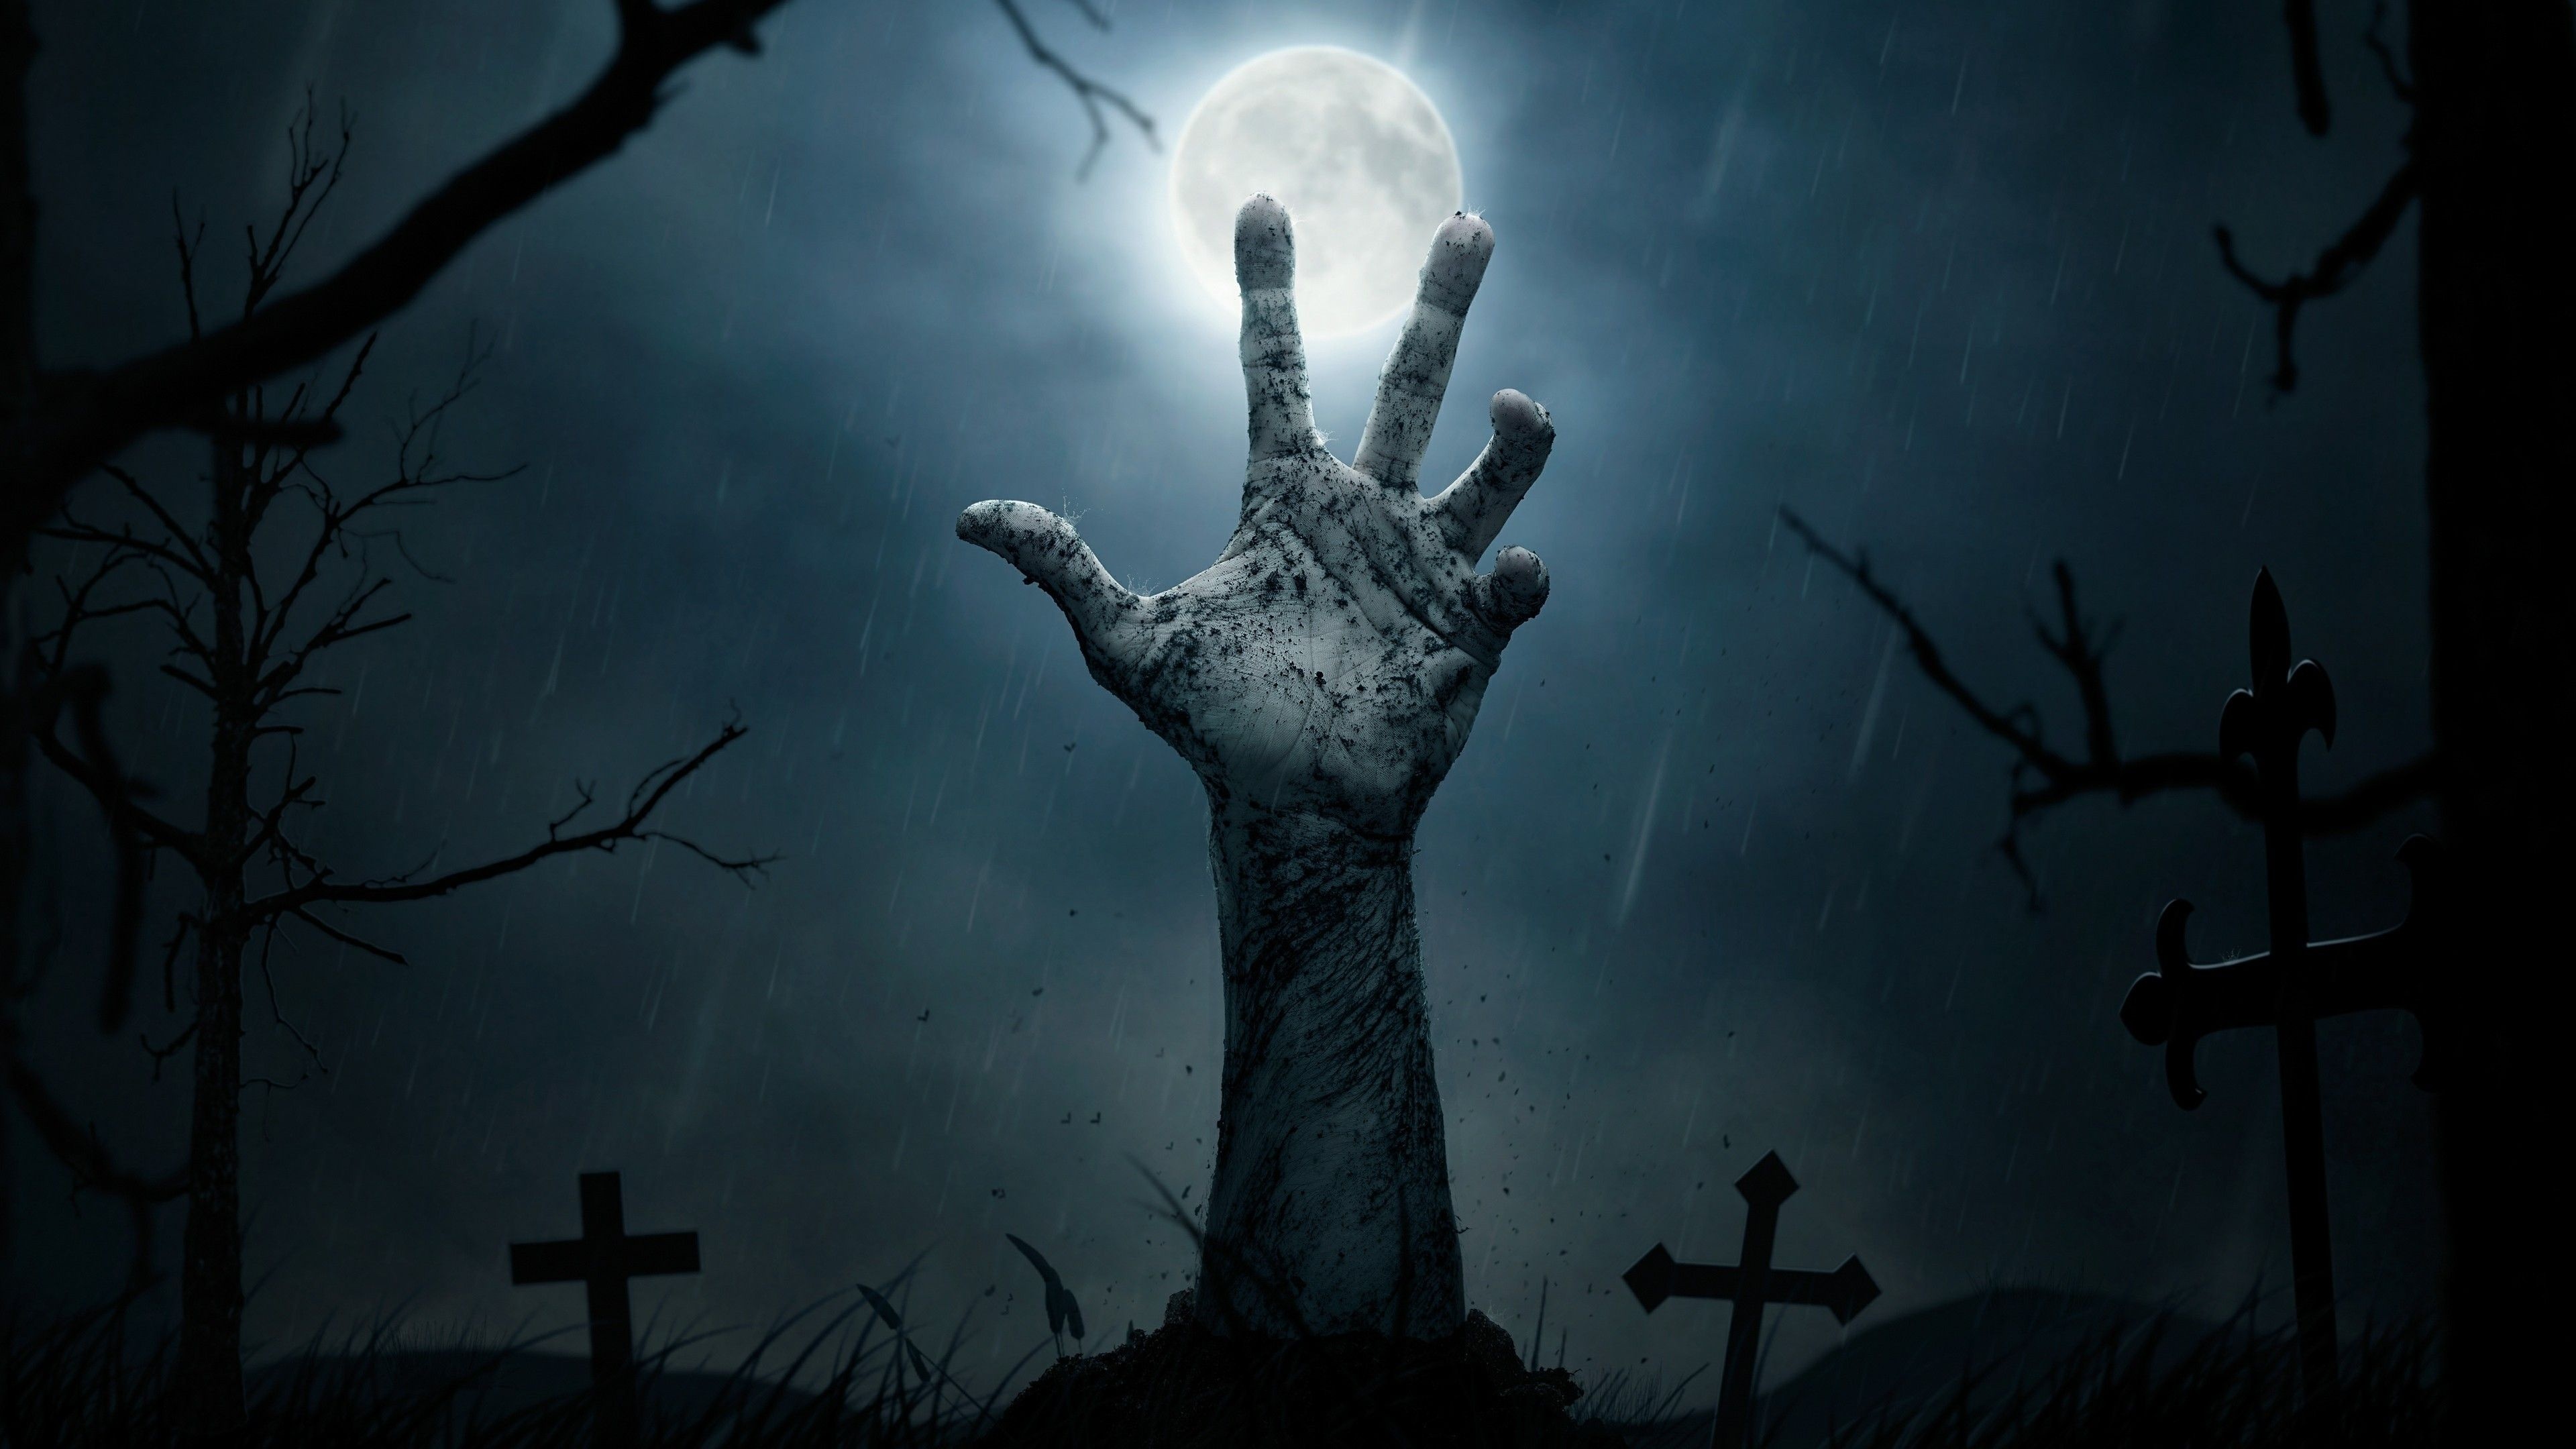 Gothic Art: Creepy atmosphere, Cemetery, Crosses, Grave, Midnight, Full moon, Zombie. 3840x2160 4K Wallpaper.